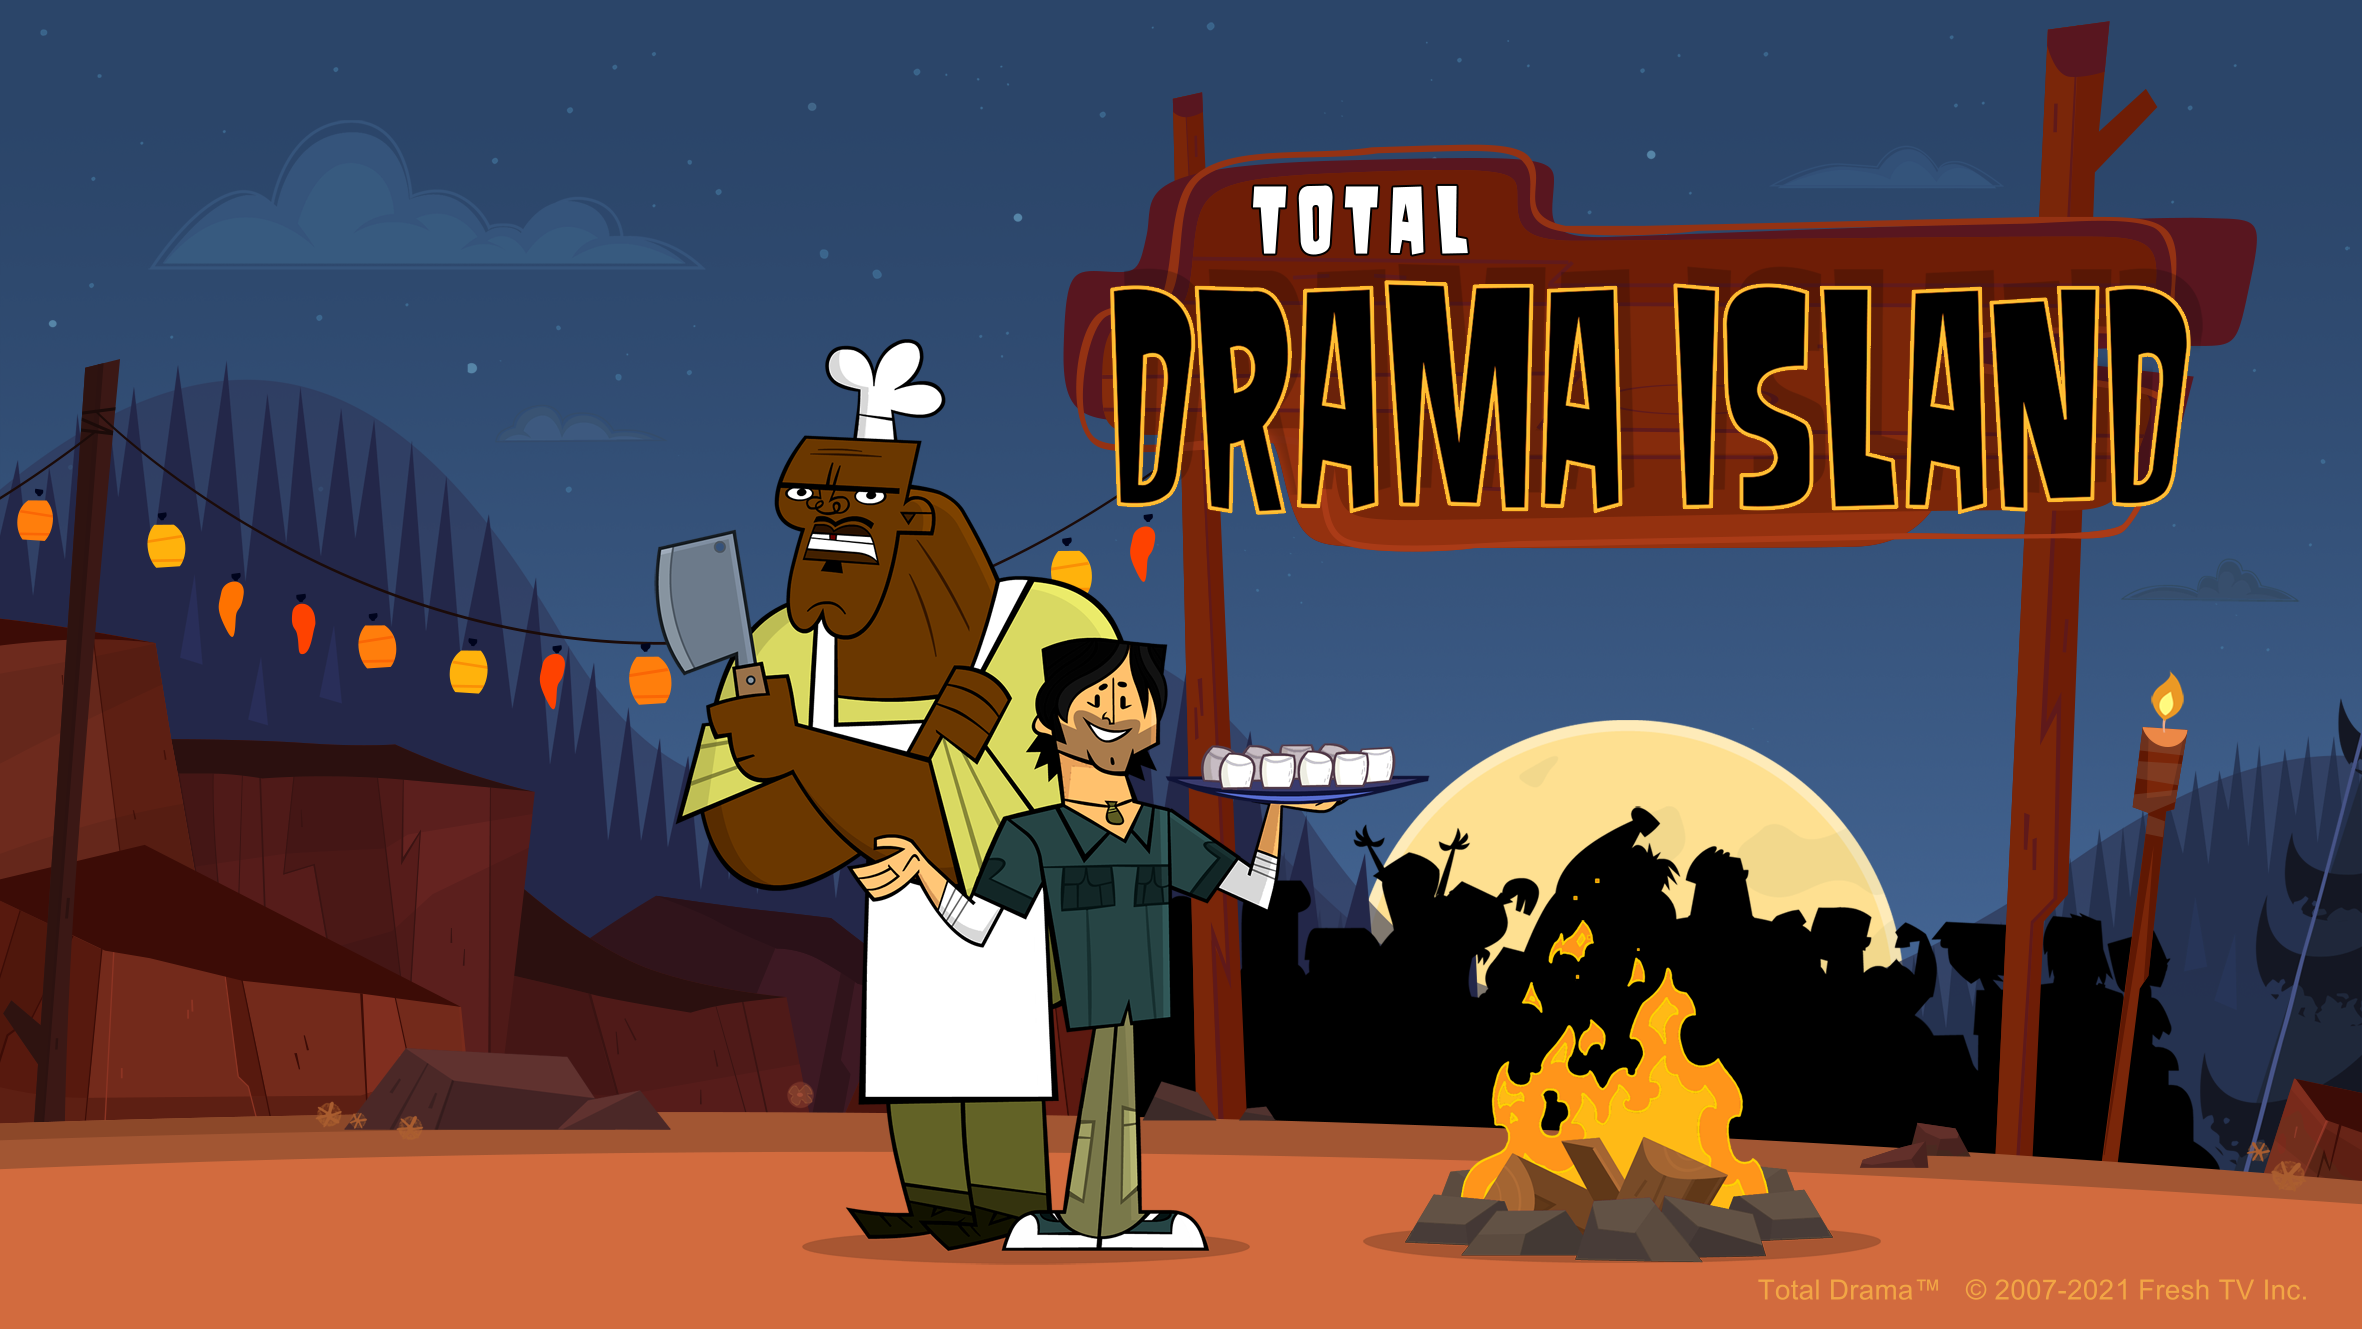 Total Drama Series  Total drama island, Cartoon, Drama